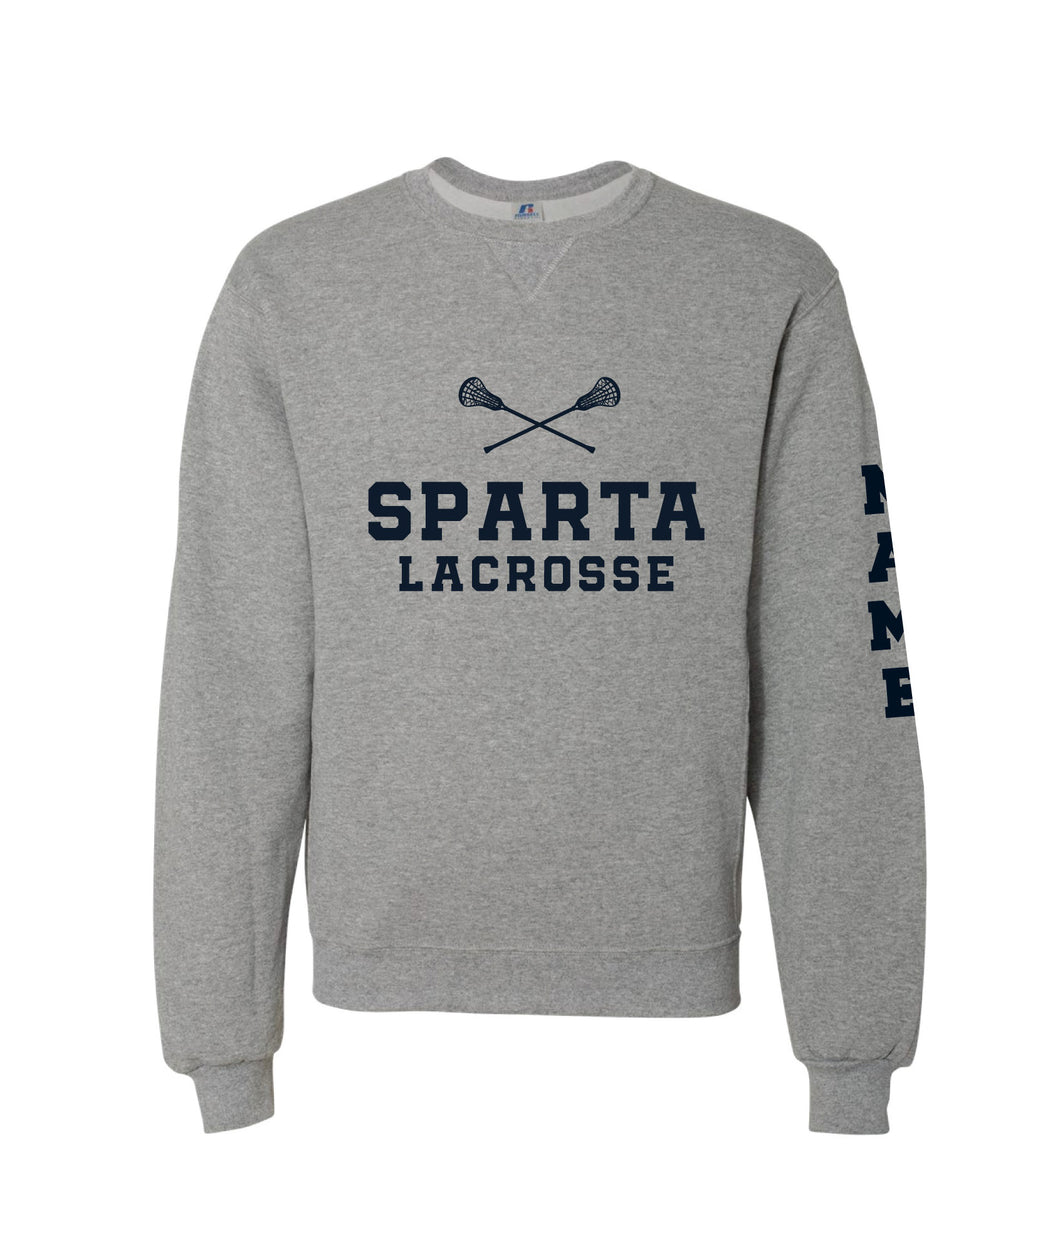 Sparta Lacrosse Russell Athletic Cotton Crewneck Sweatshirt - Gray - 5KounT